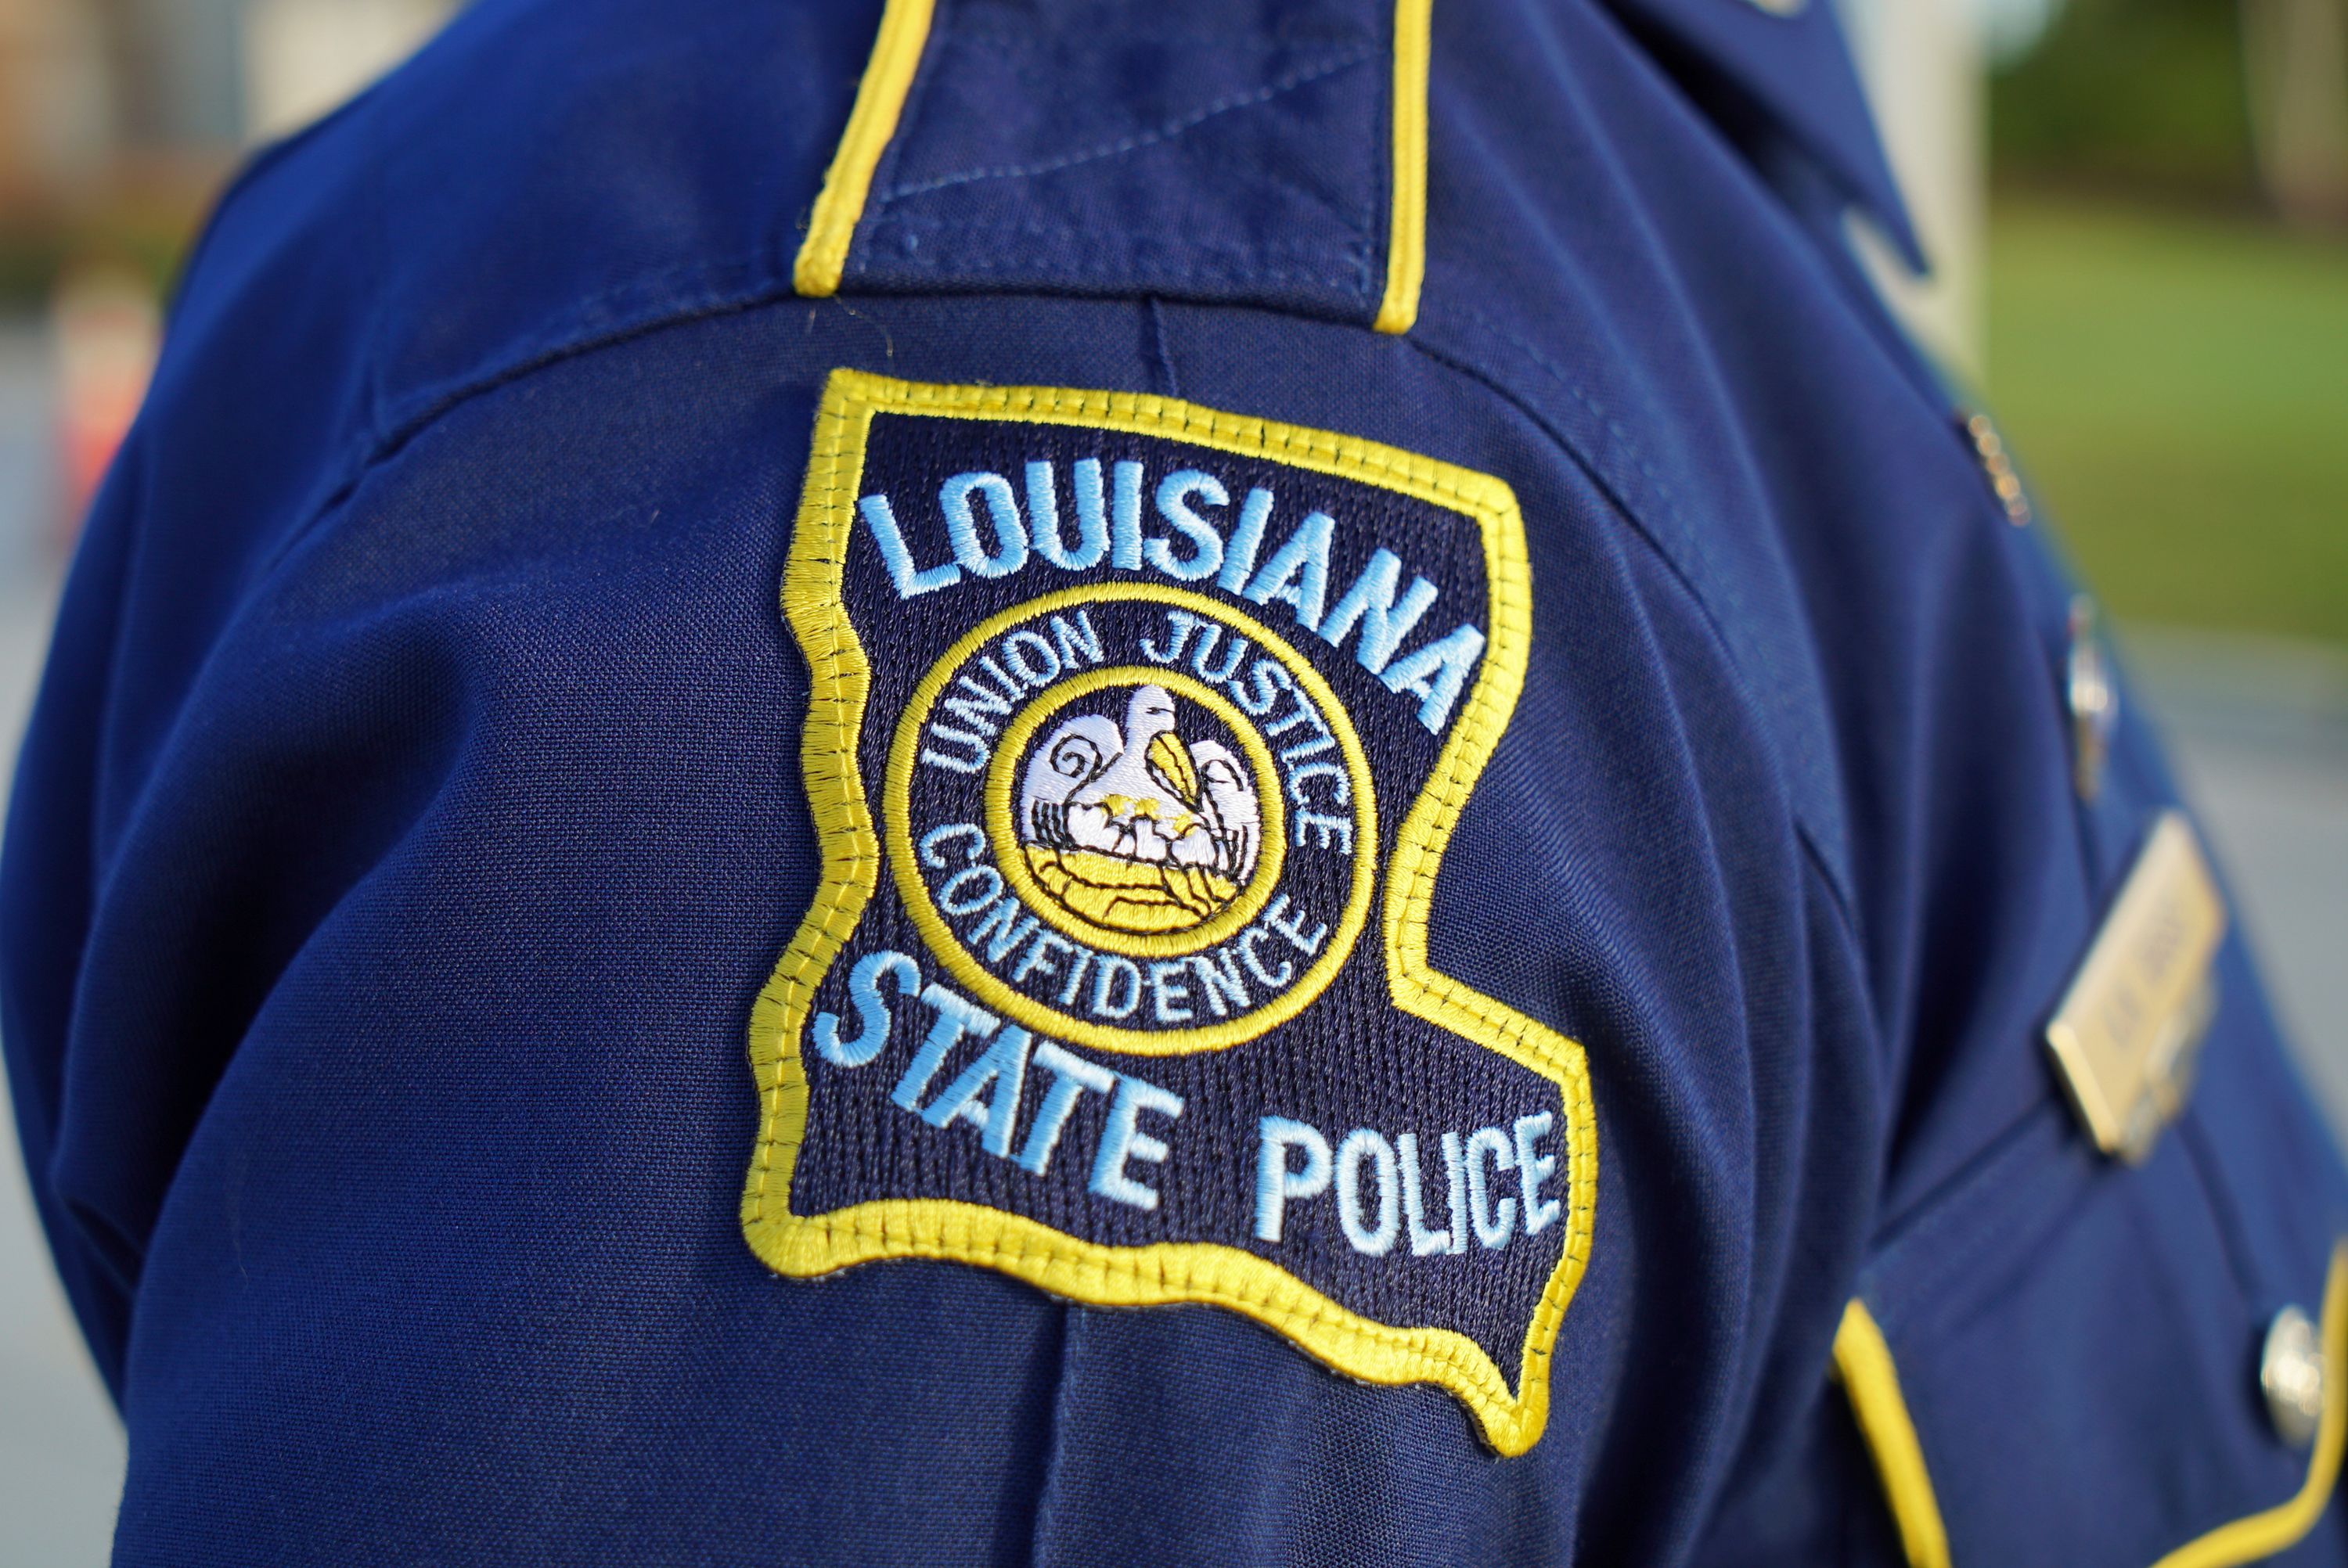 Louisiana State Police Badge